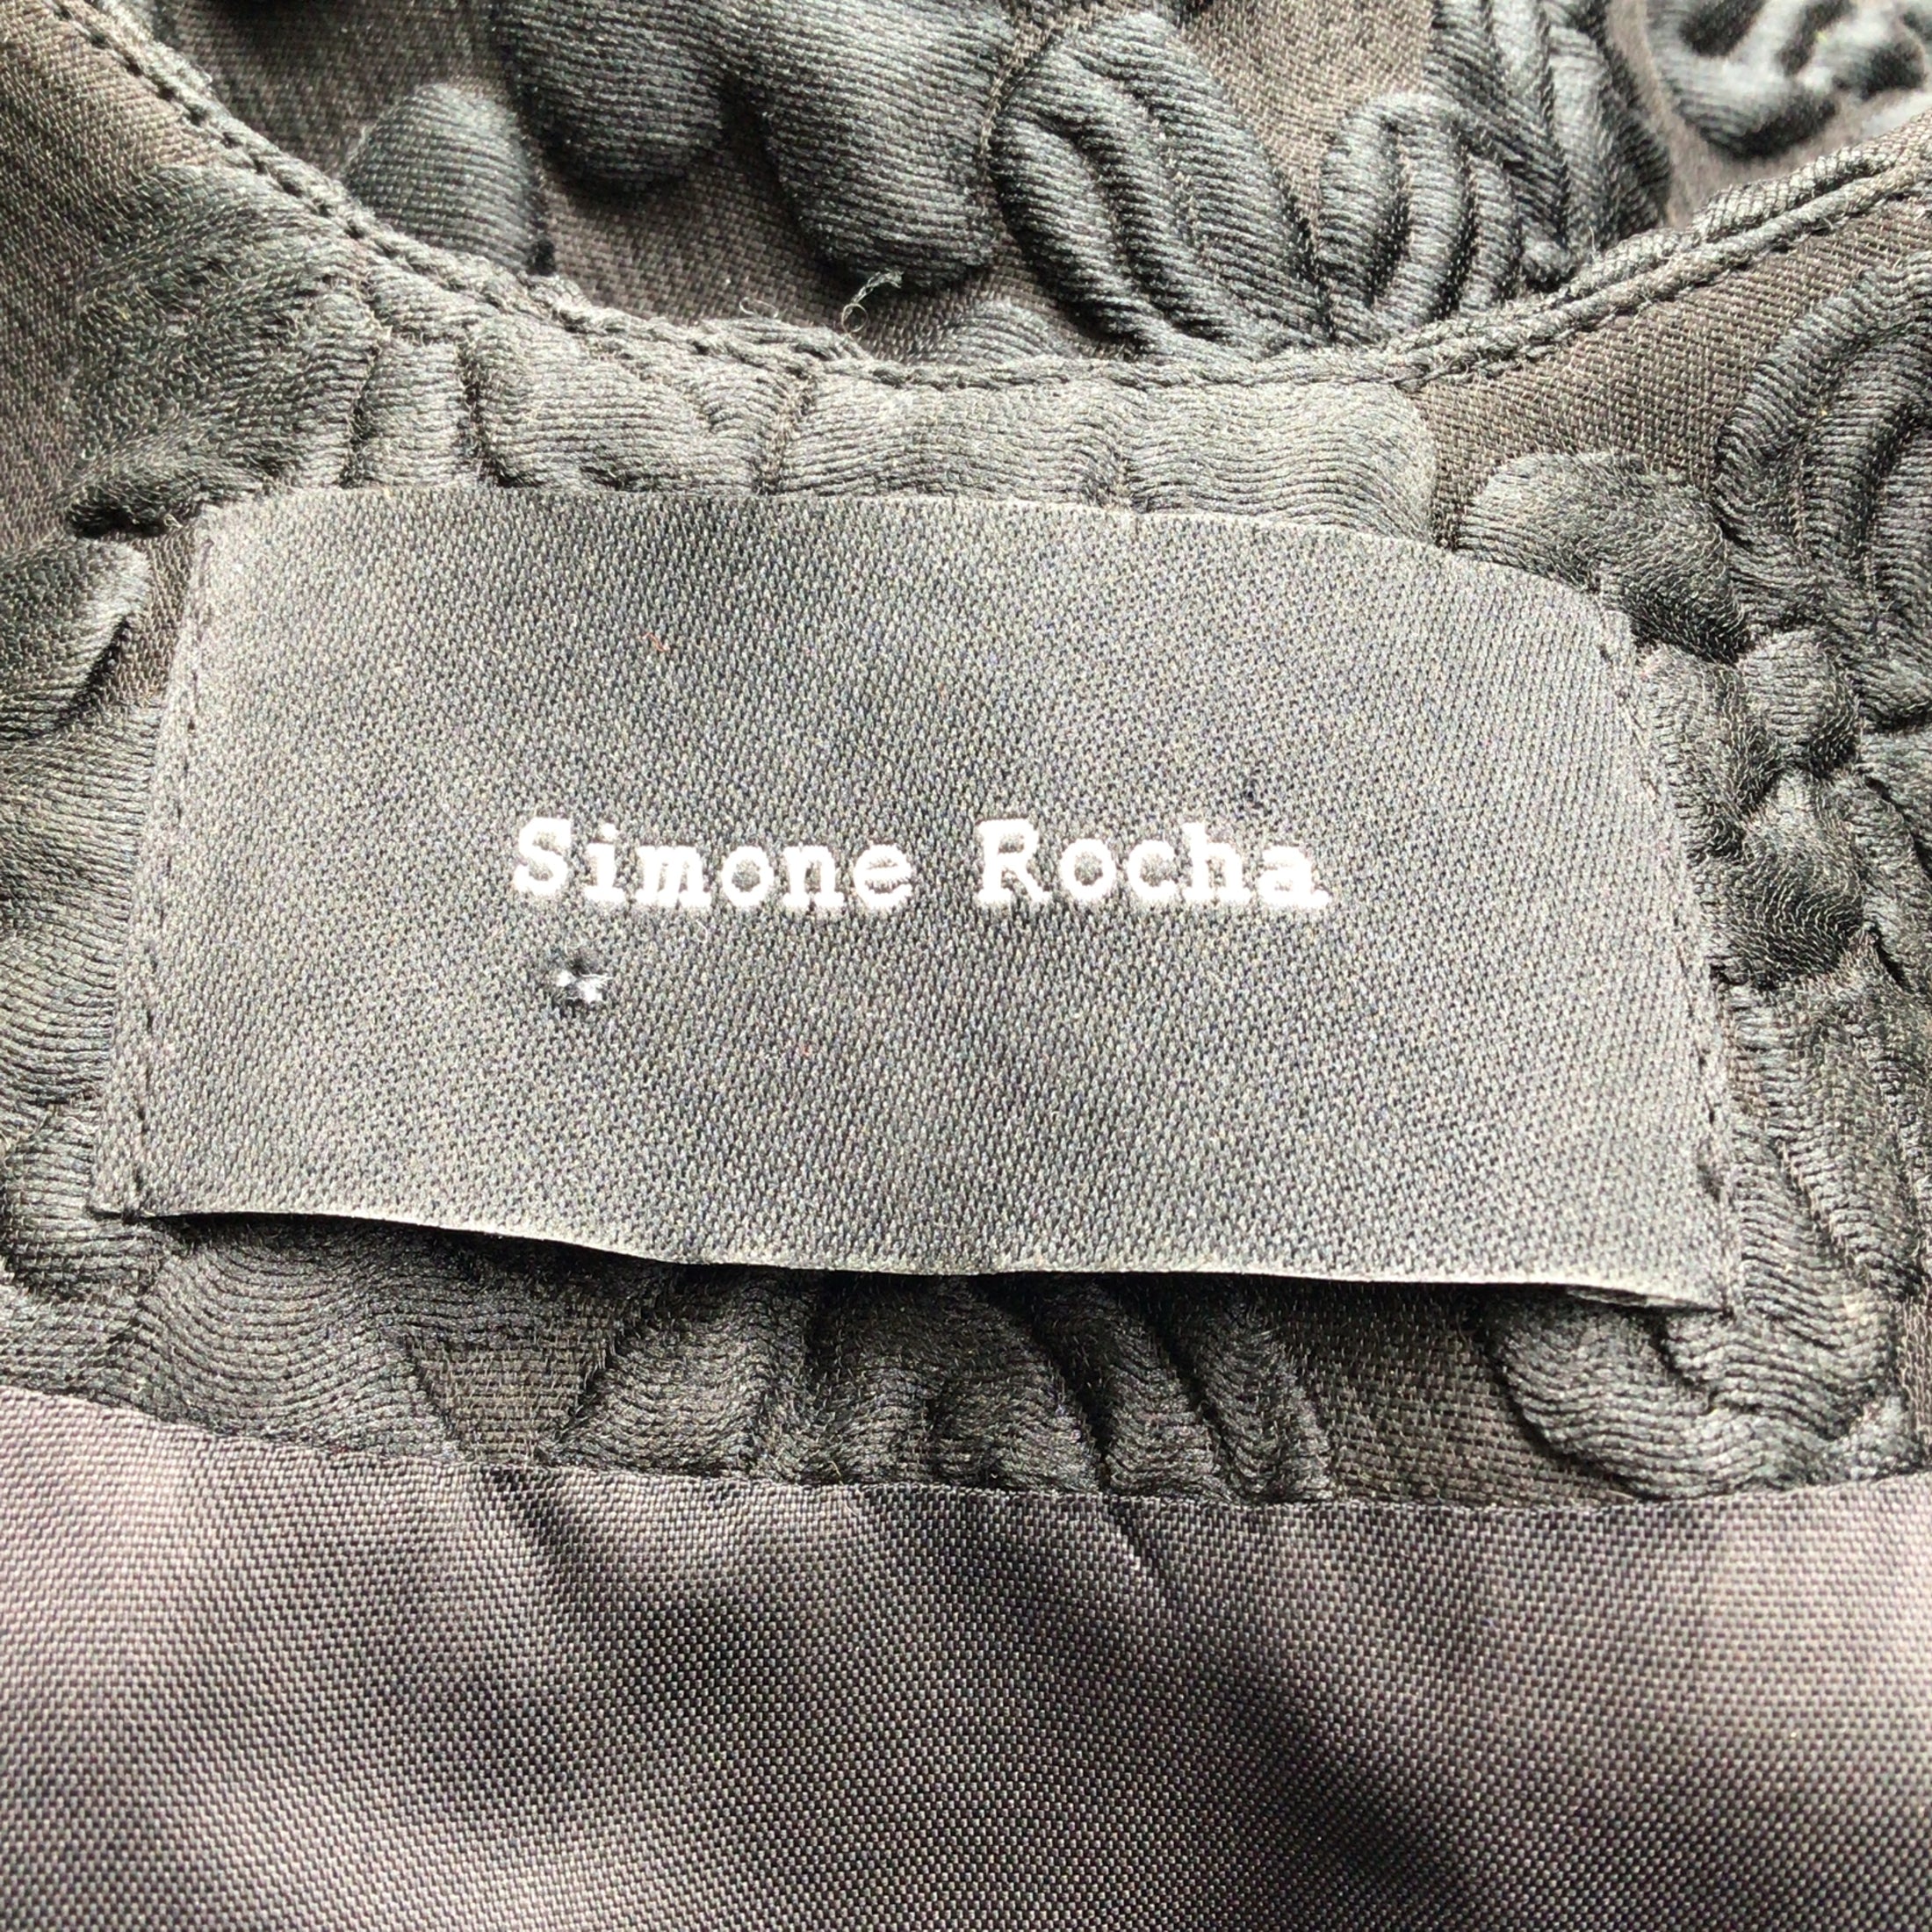 Simone Rocha Black Quilted Floral Brocade Asymmetrical Hem Satin Dress